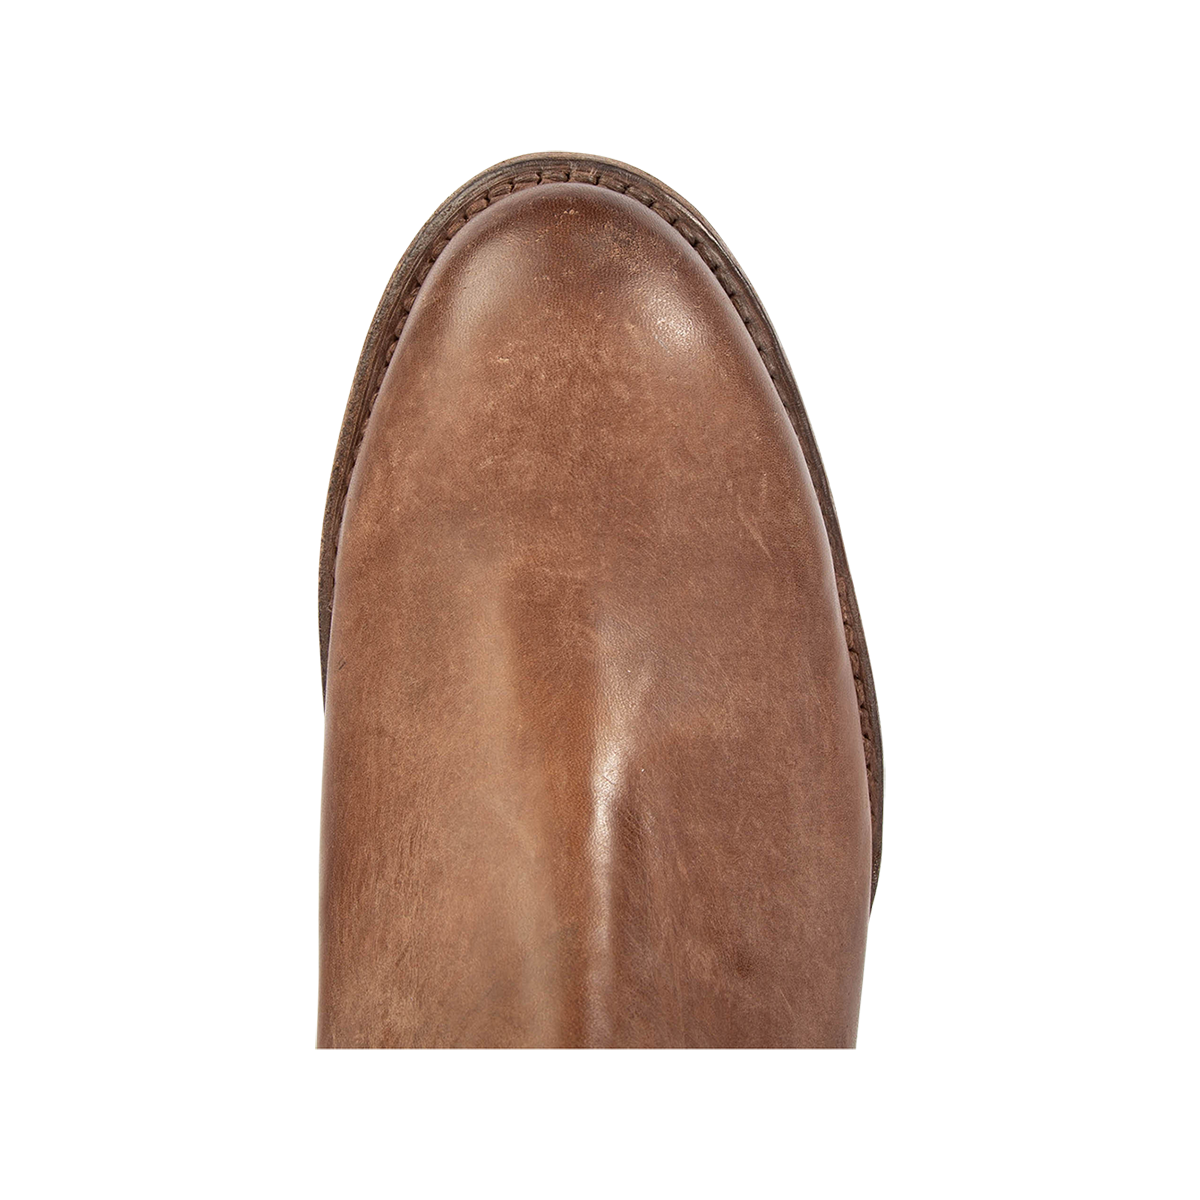 Top view showing almond toe on FREEBIRD men's Pueblo black tan boot